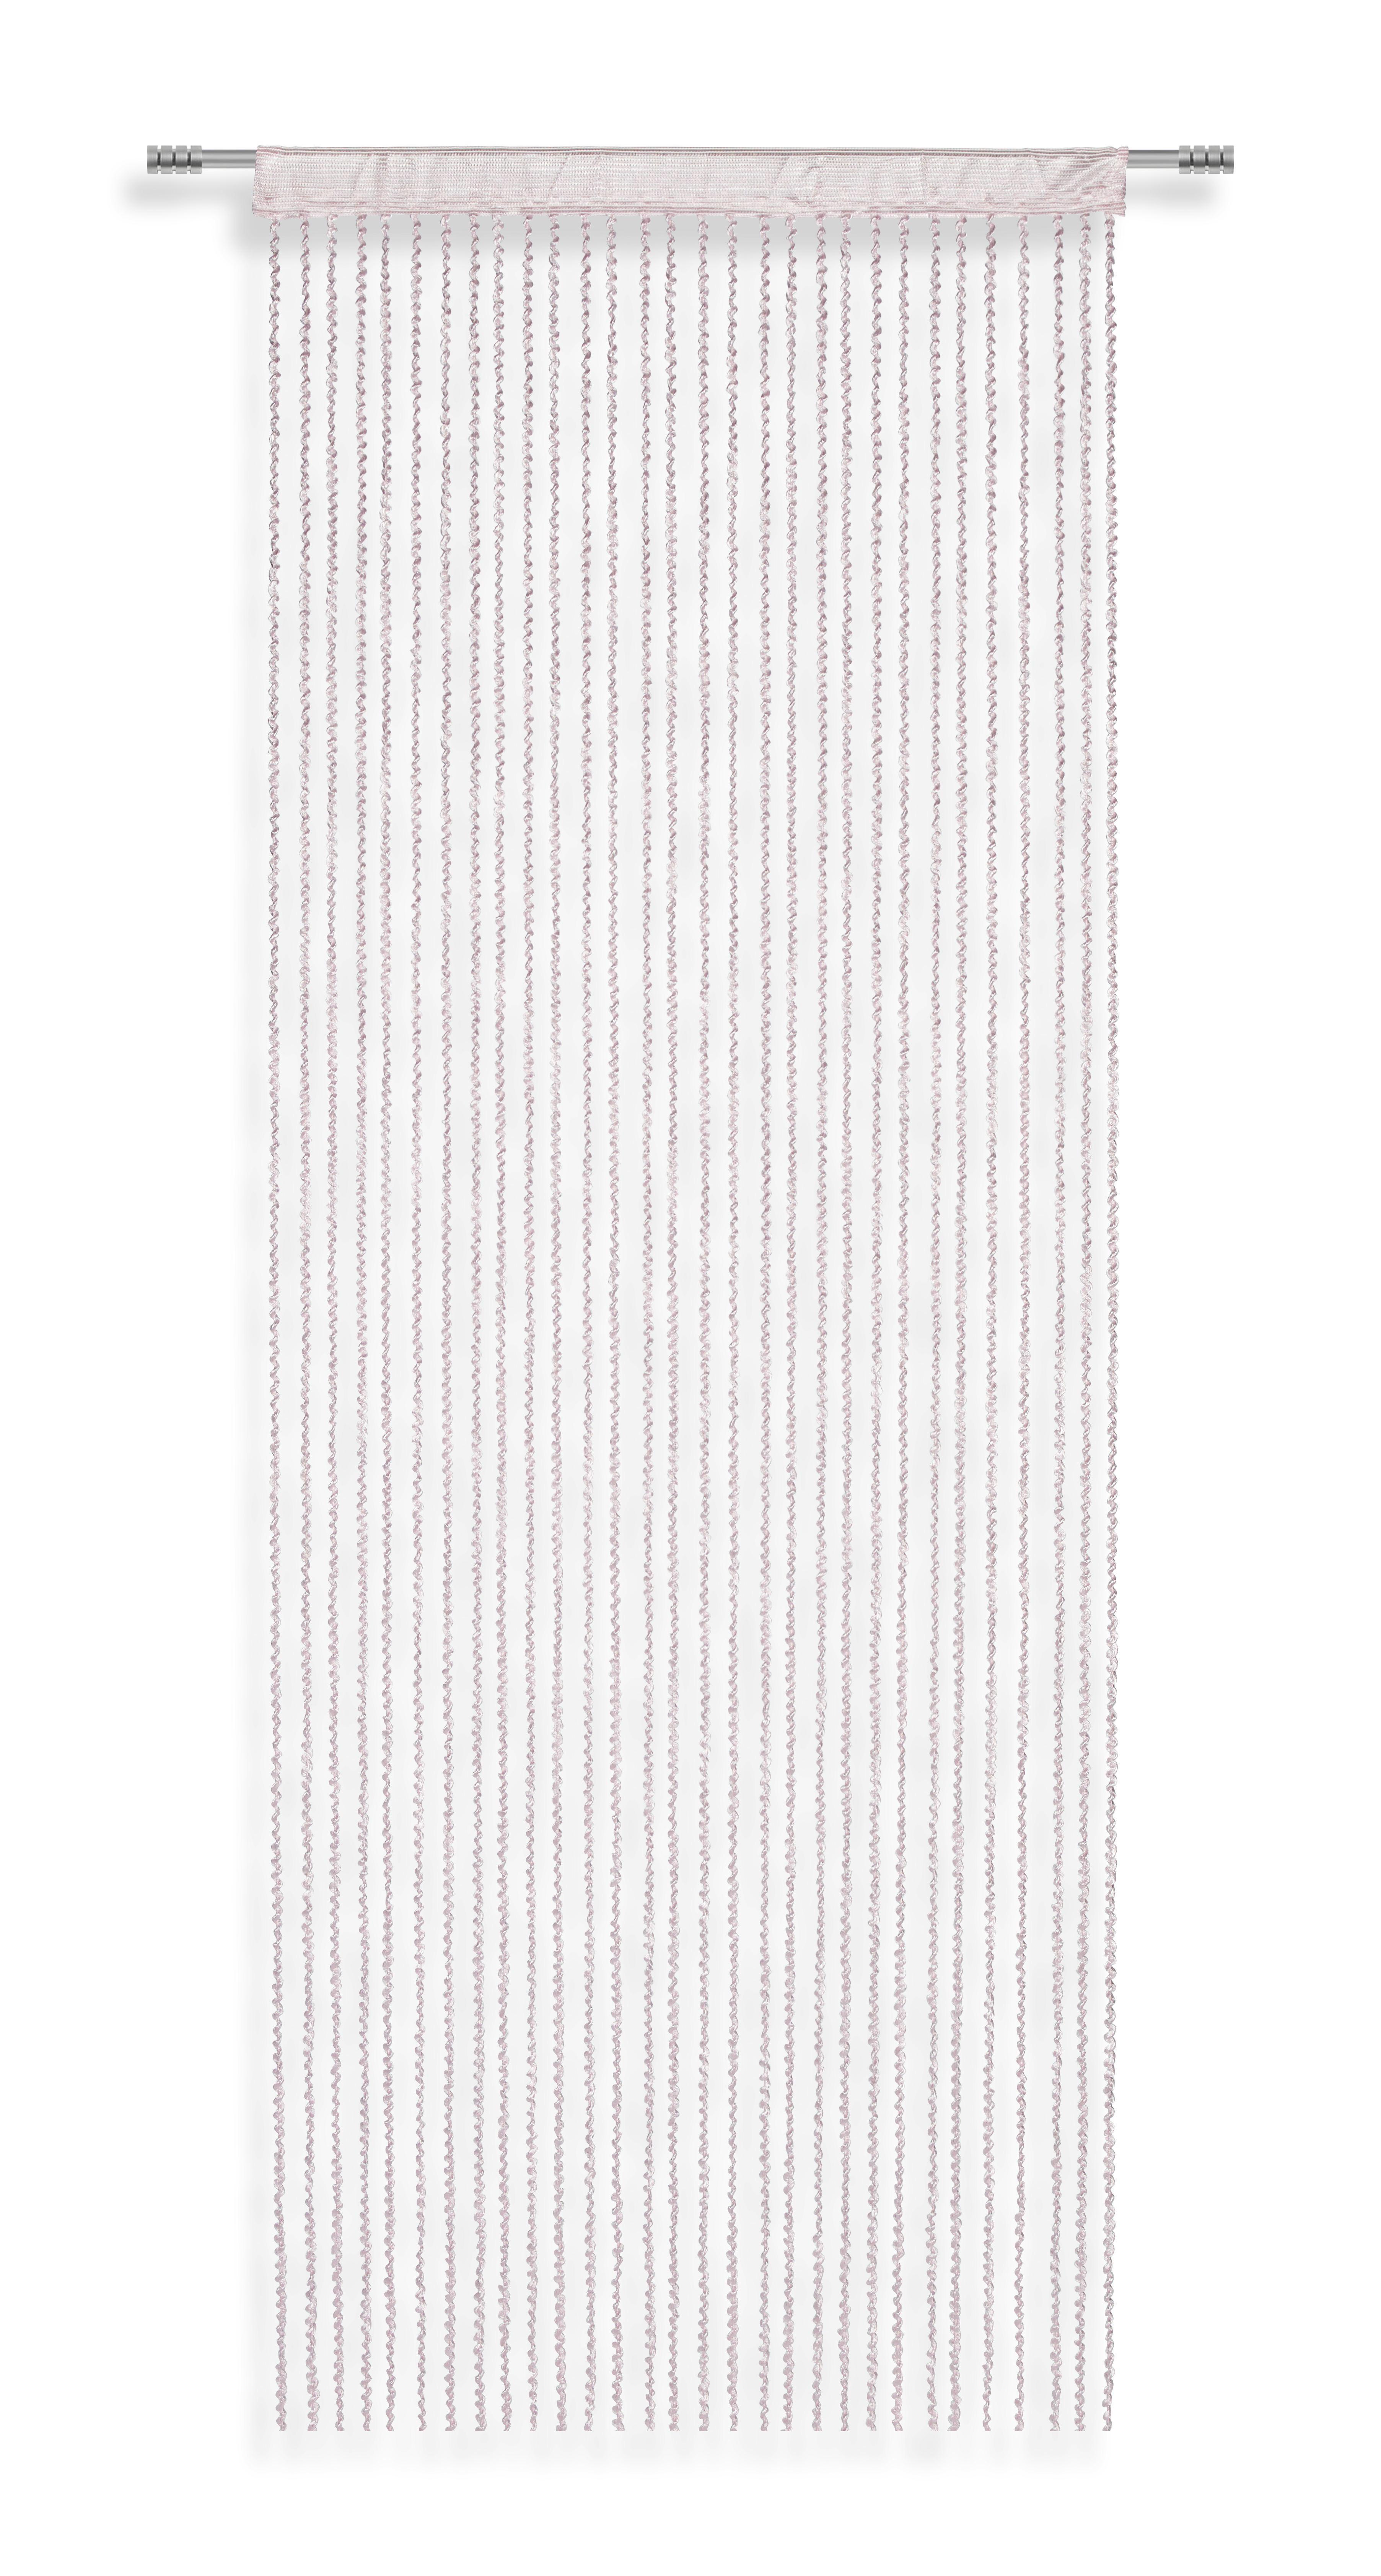 Fadenvorhang Stangendurchzug Renata B: 90cm, Rose - Rosa, MODERN, Textil (90/245cm) - Luca Bessoni